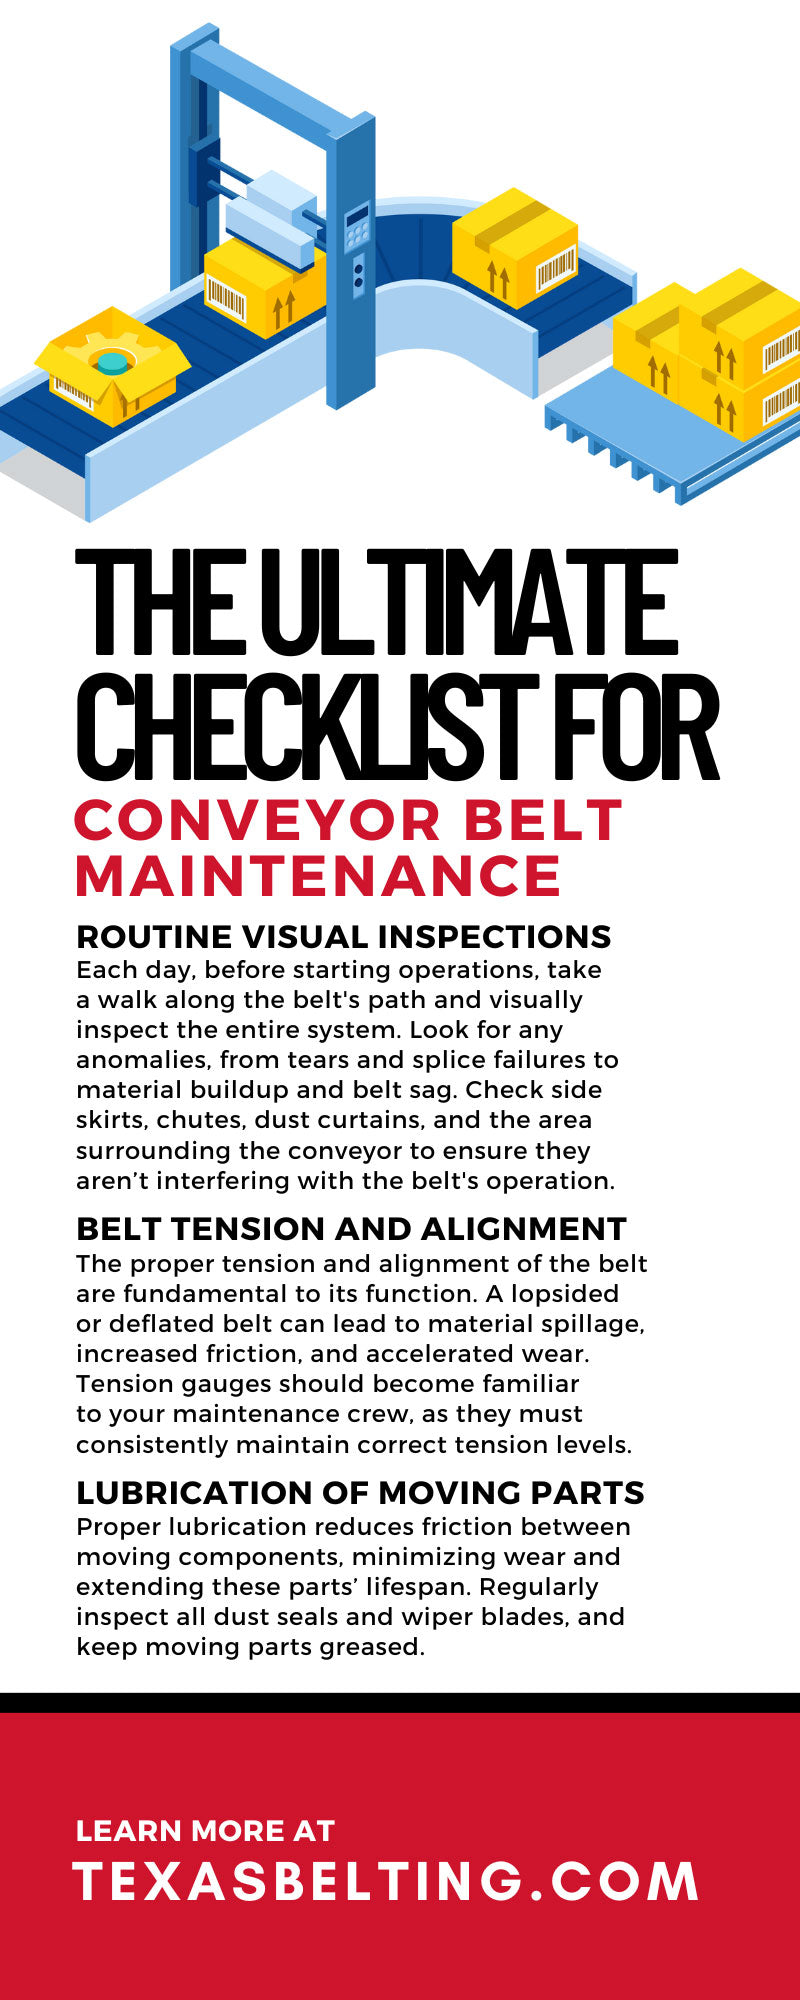 The Ultimate Checklist for Conveyor Belt Maintenance